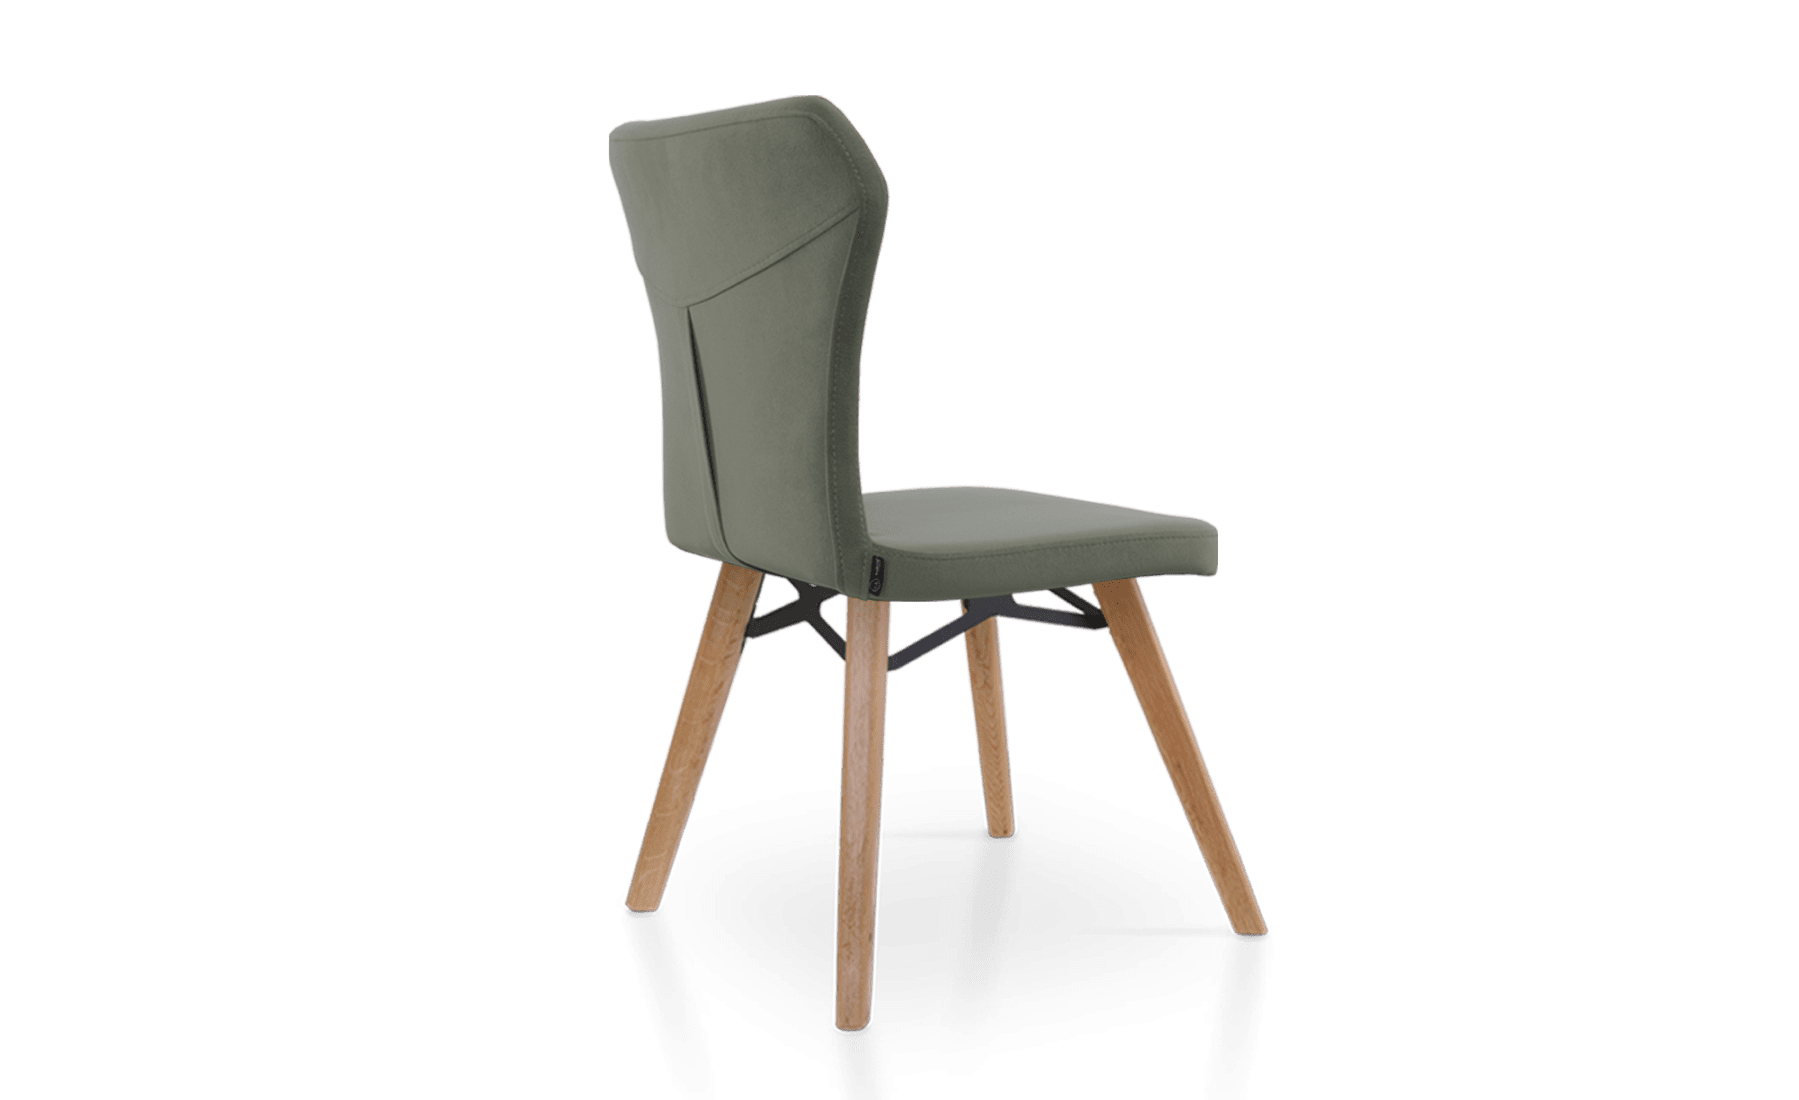 5.-New-Chair-Vito